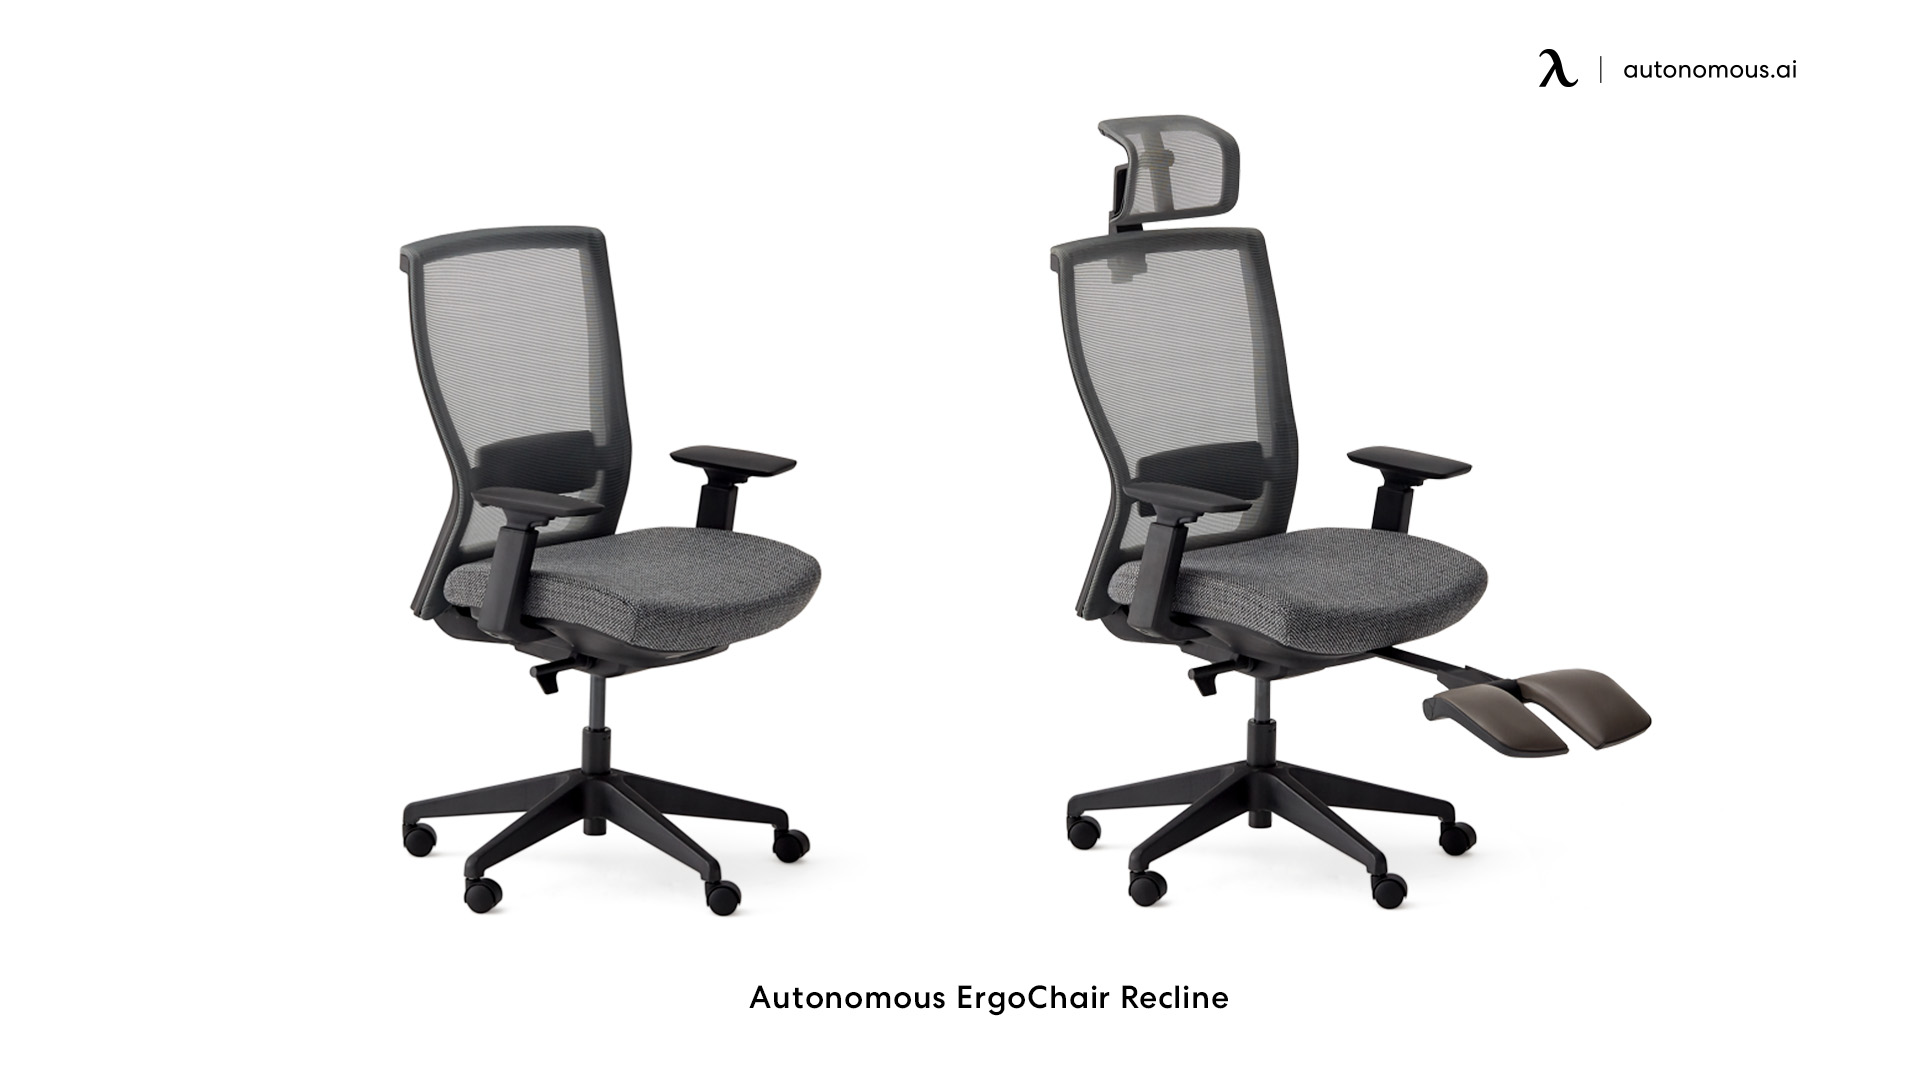 ErgoChair Recline adjustable chair with wheels